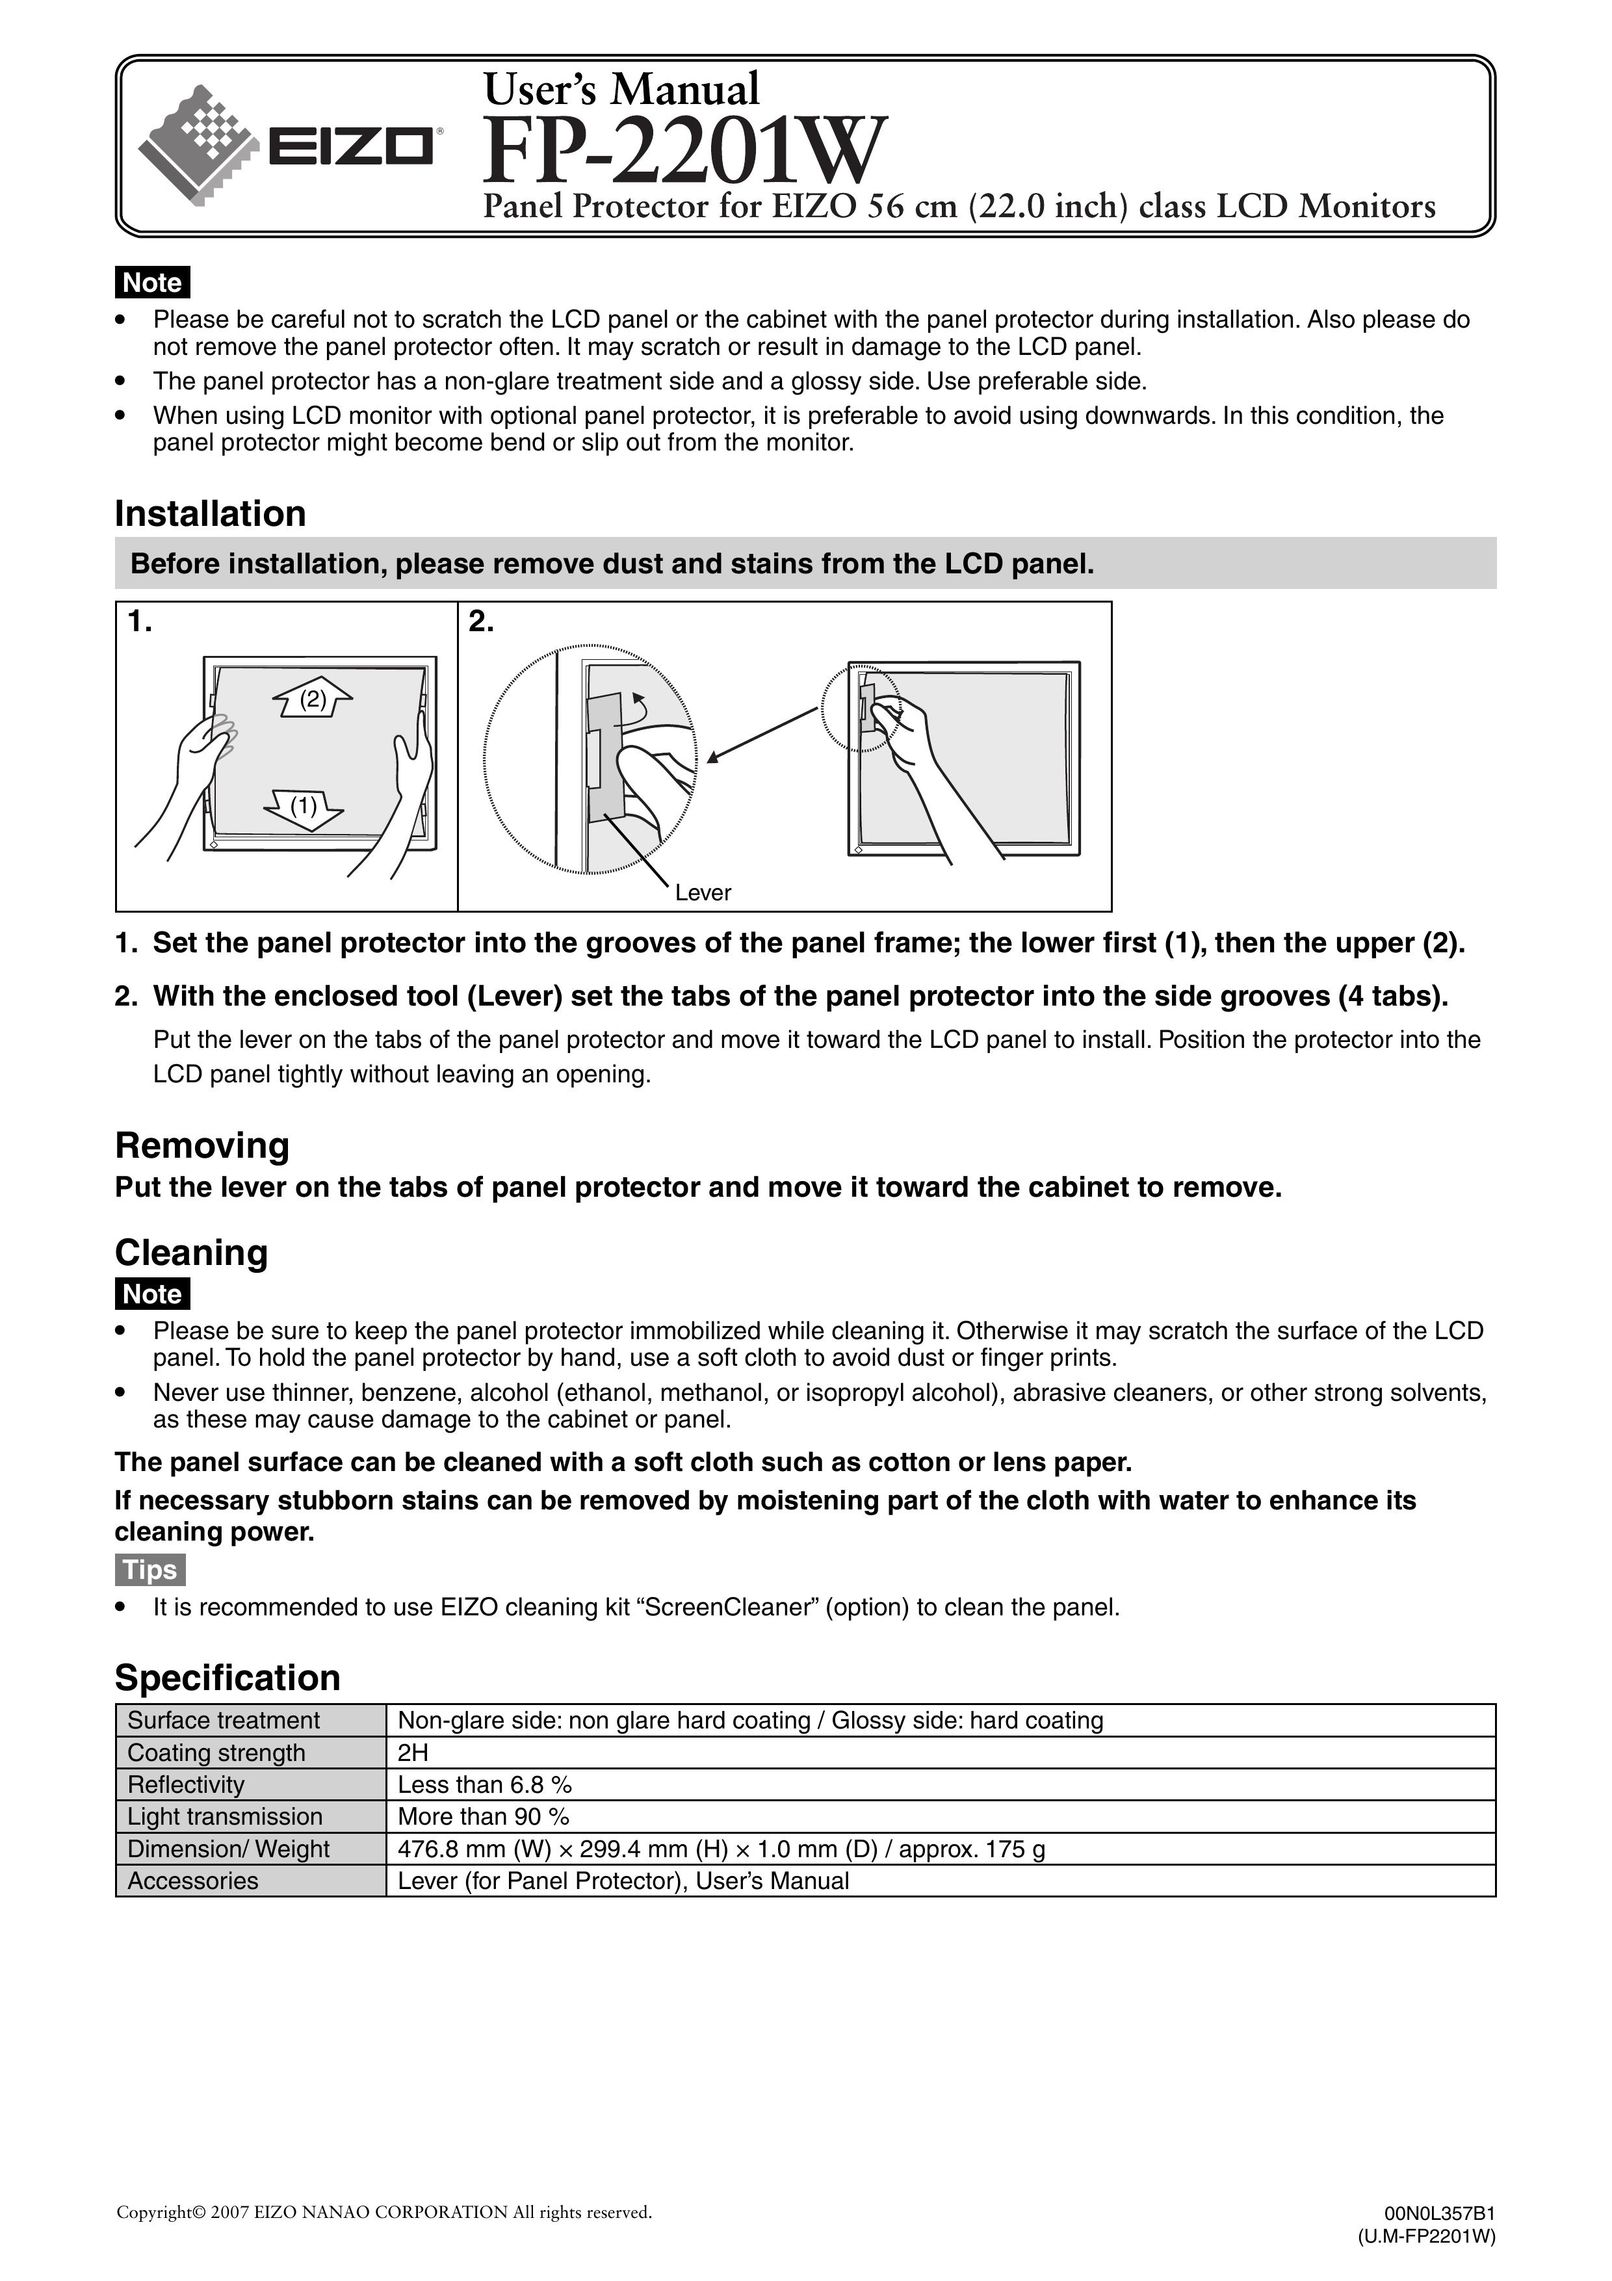 Eizo FP-2100W Car Video System User Manual